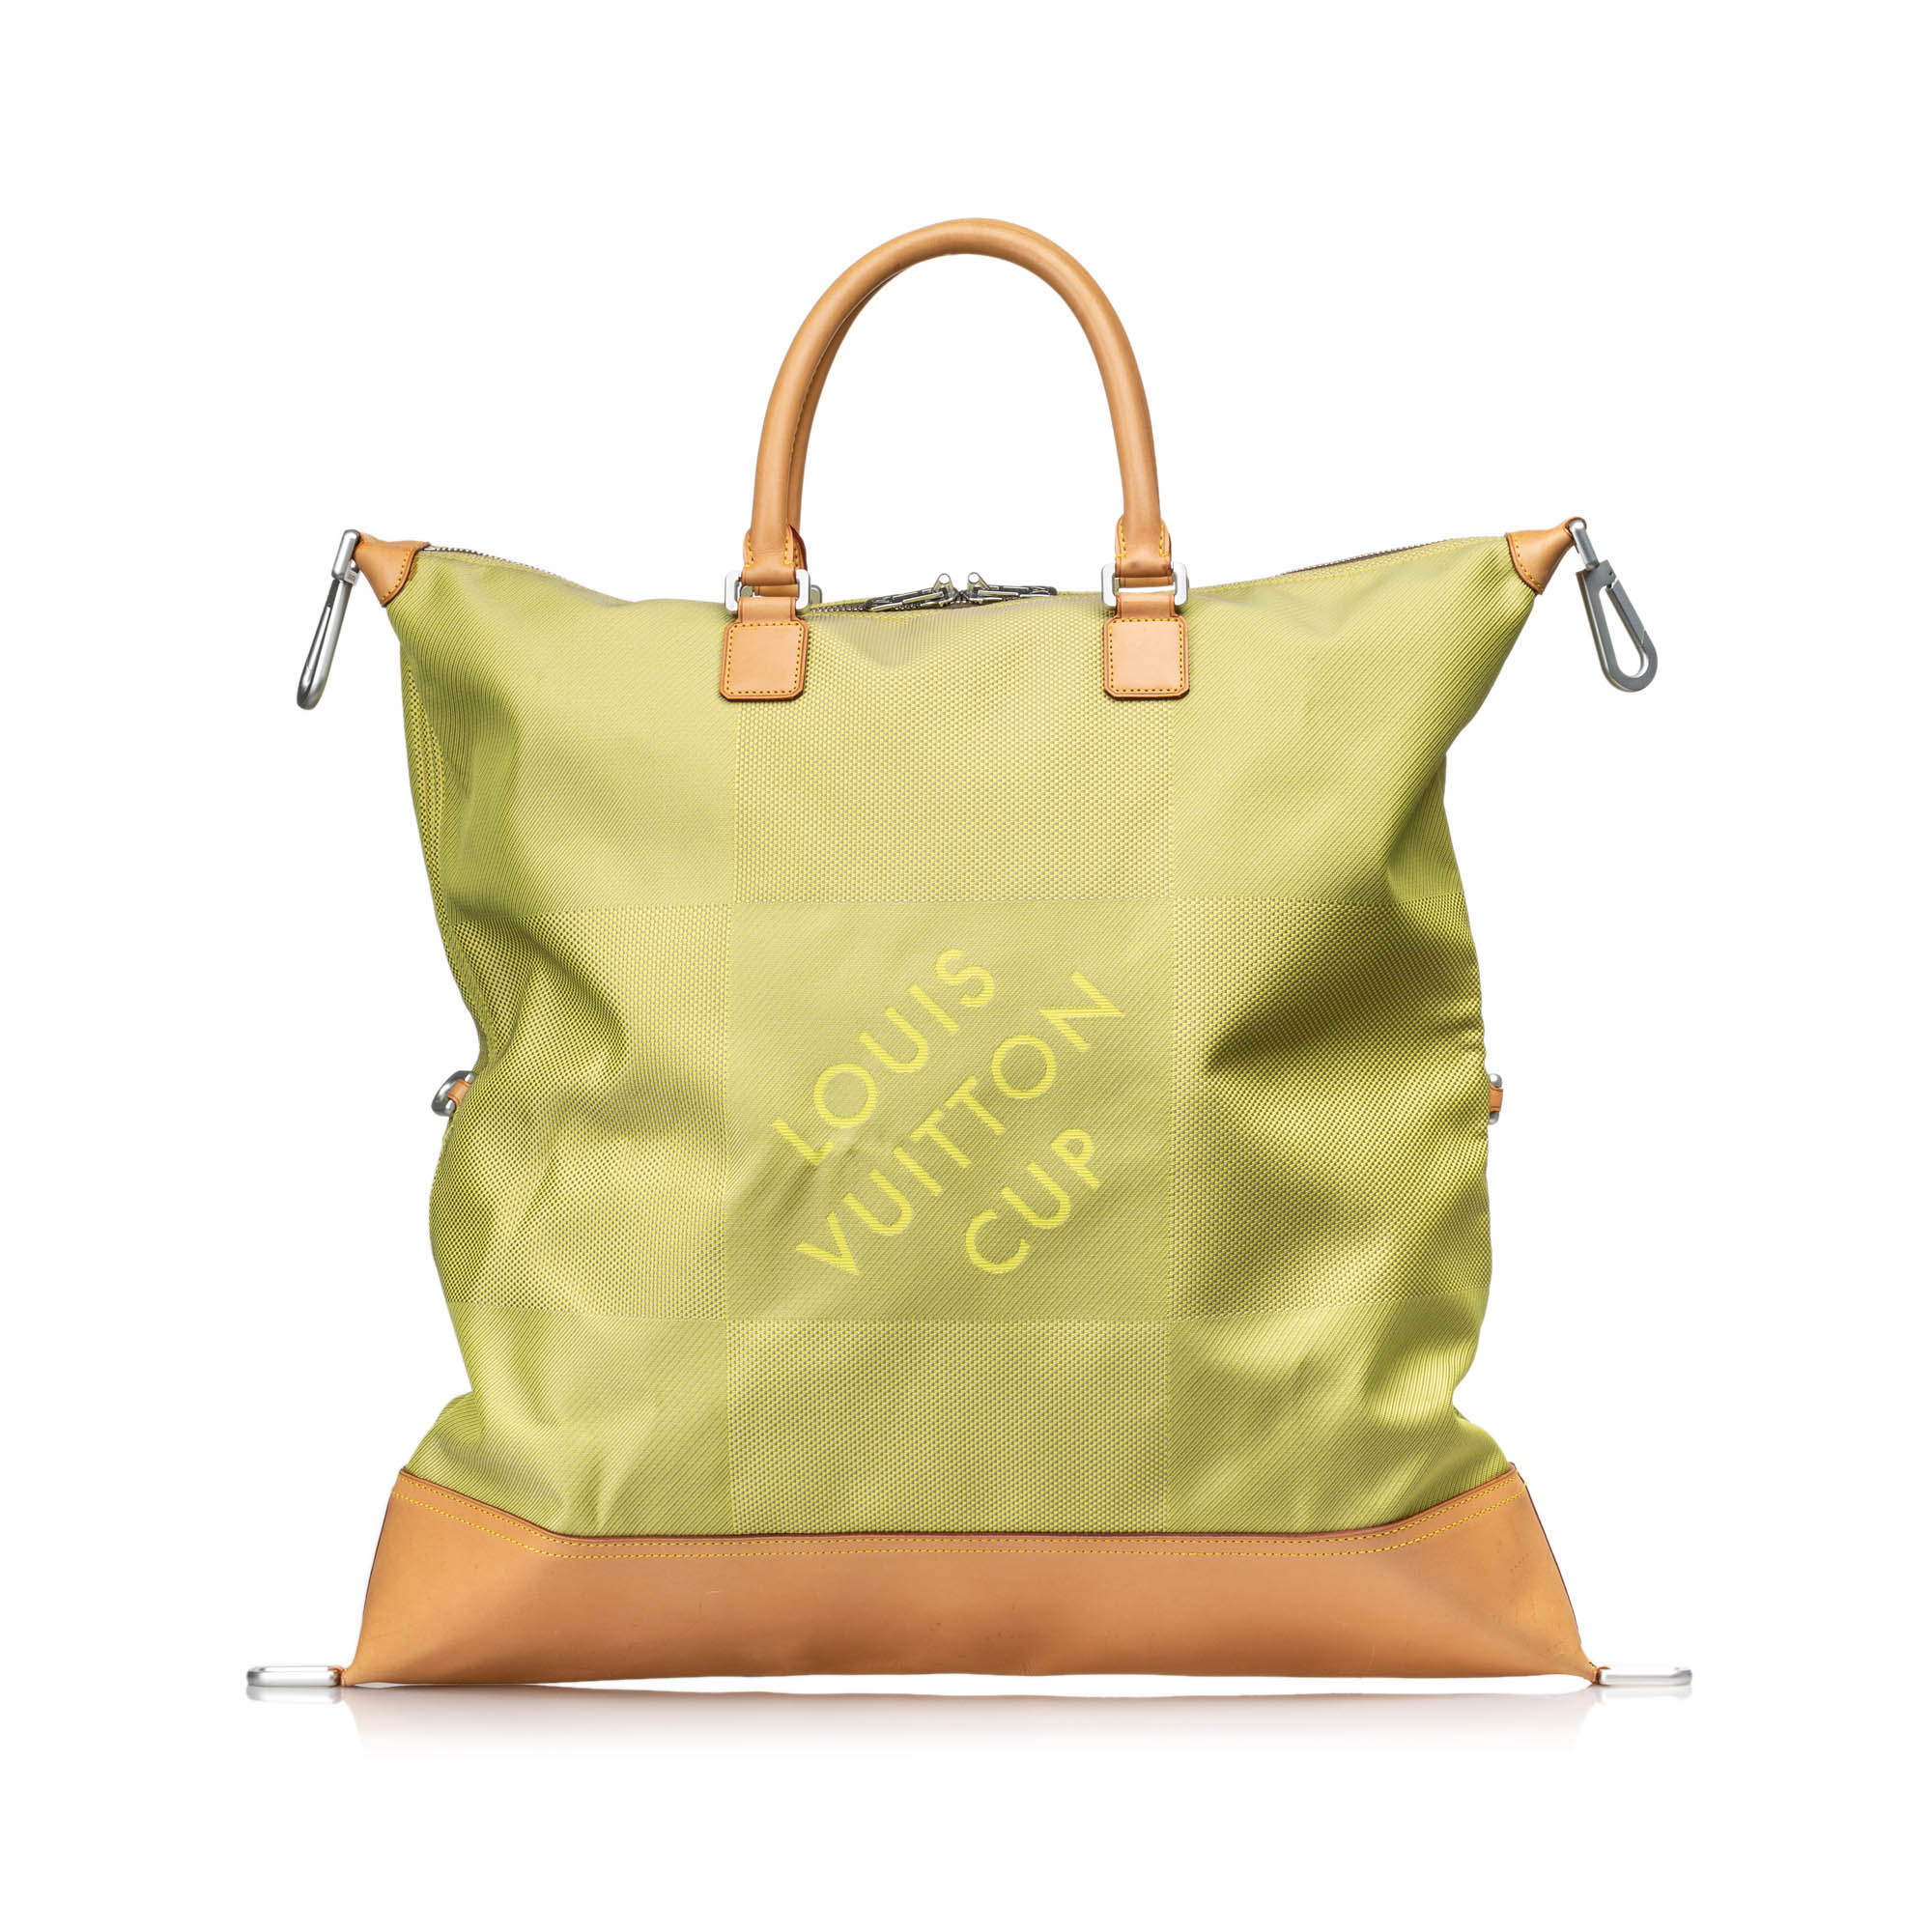 Louis Vuitton Green Damier Geant LV Cup Cube 2way Duffle Bag 863000